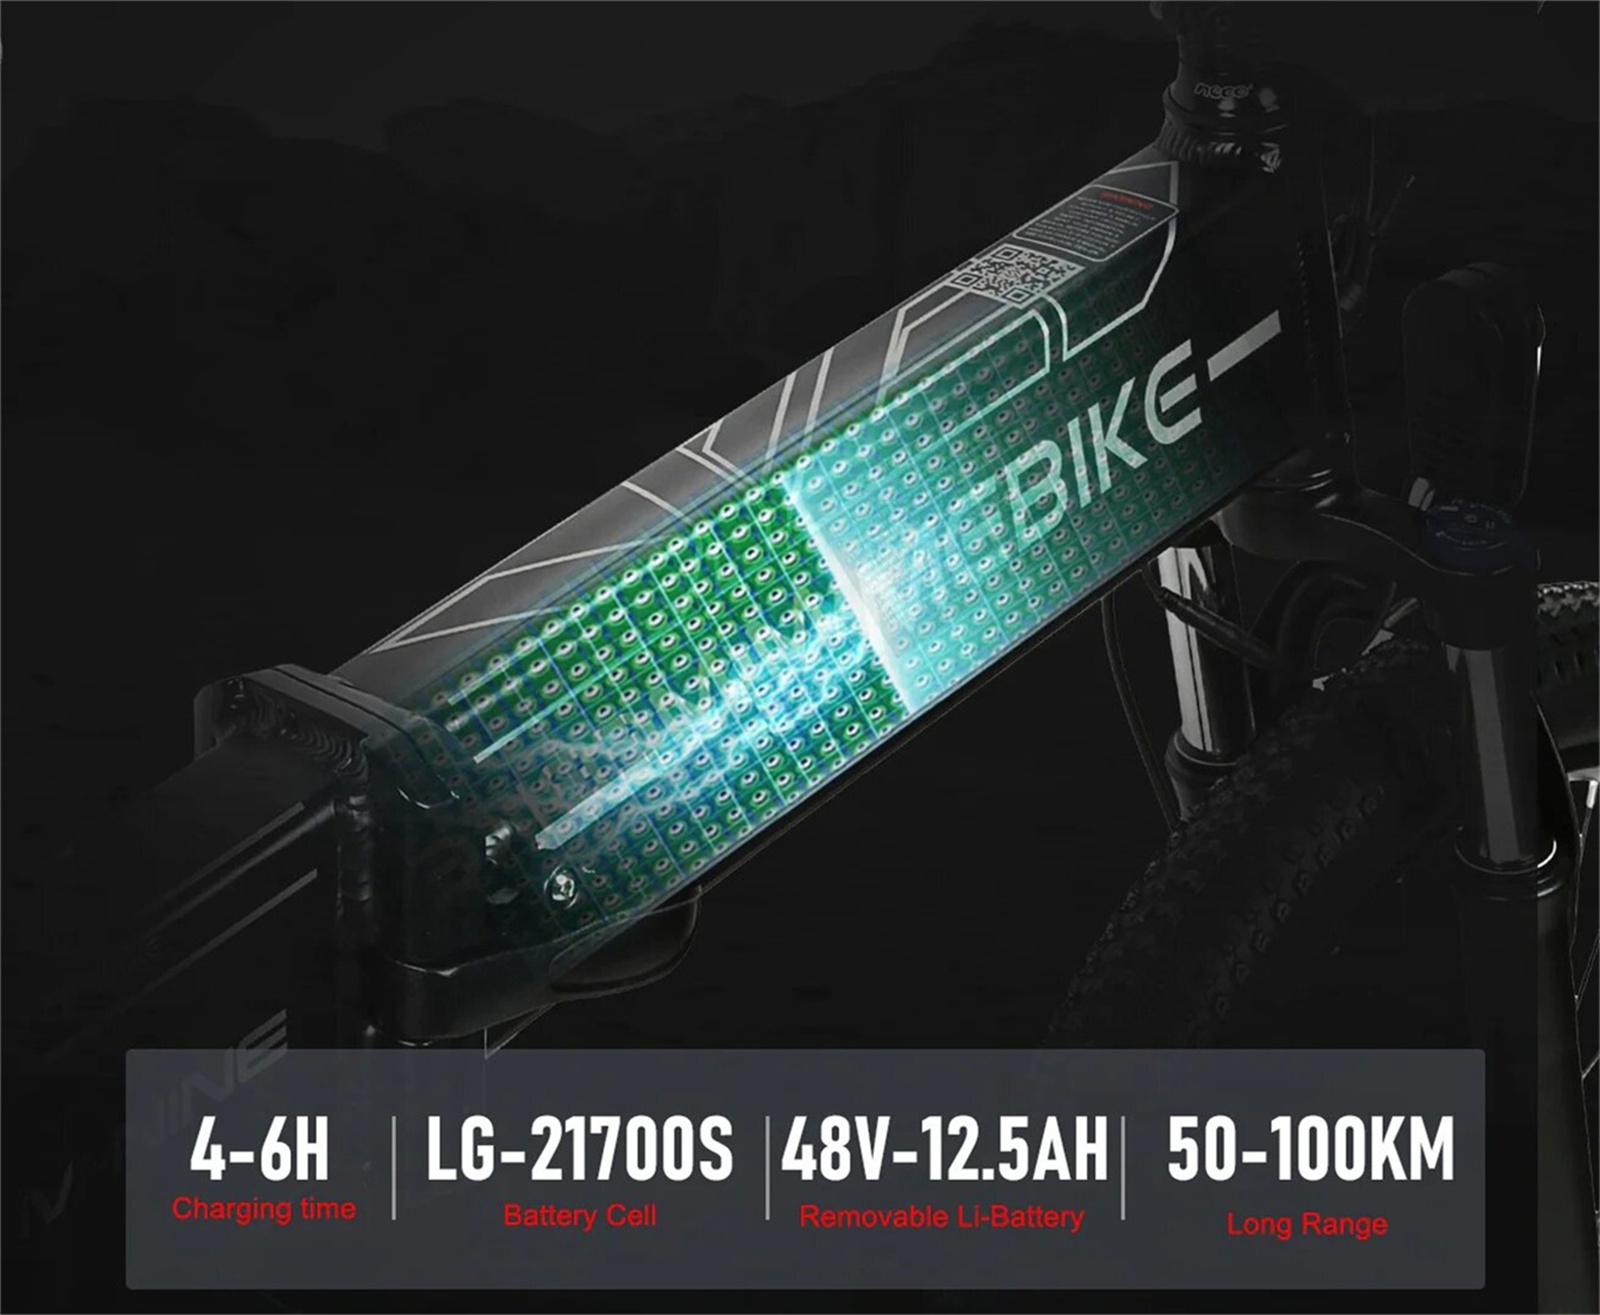 SAMEBIKE E-BIKE All Terrain 26 (ATB) Zoll, Weiß) Unisex-Rad, (Laufradgröße: Bike